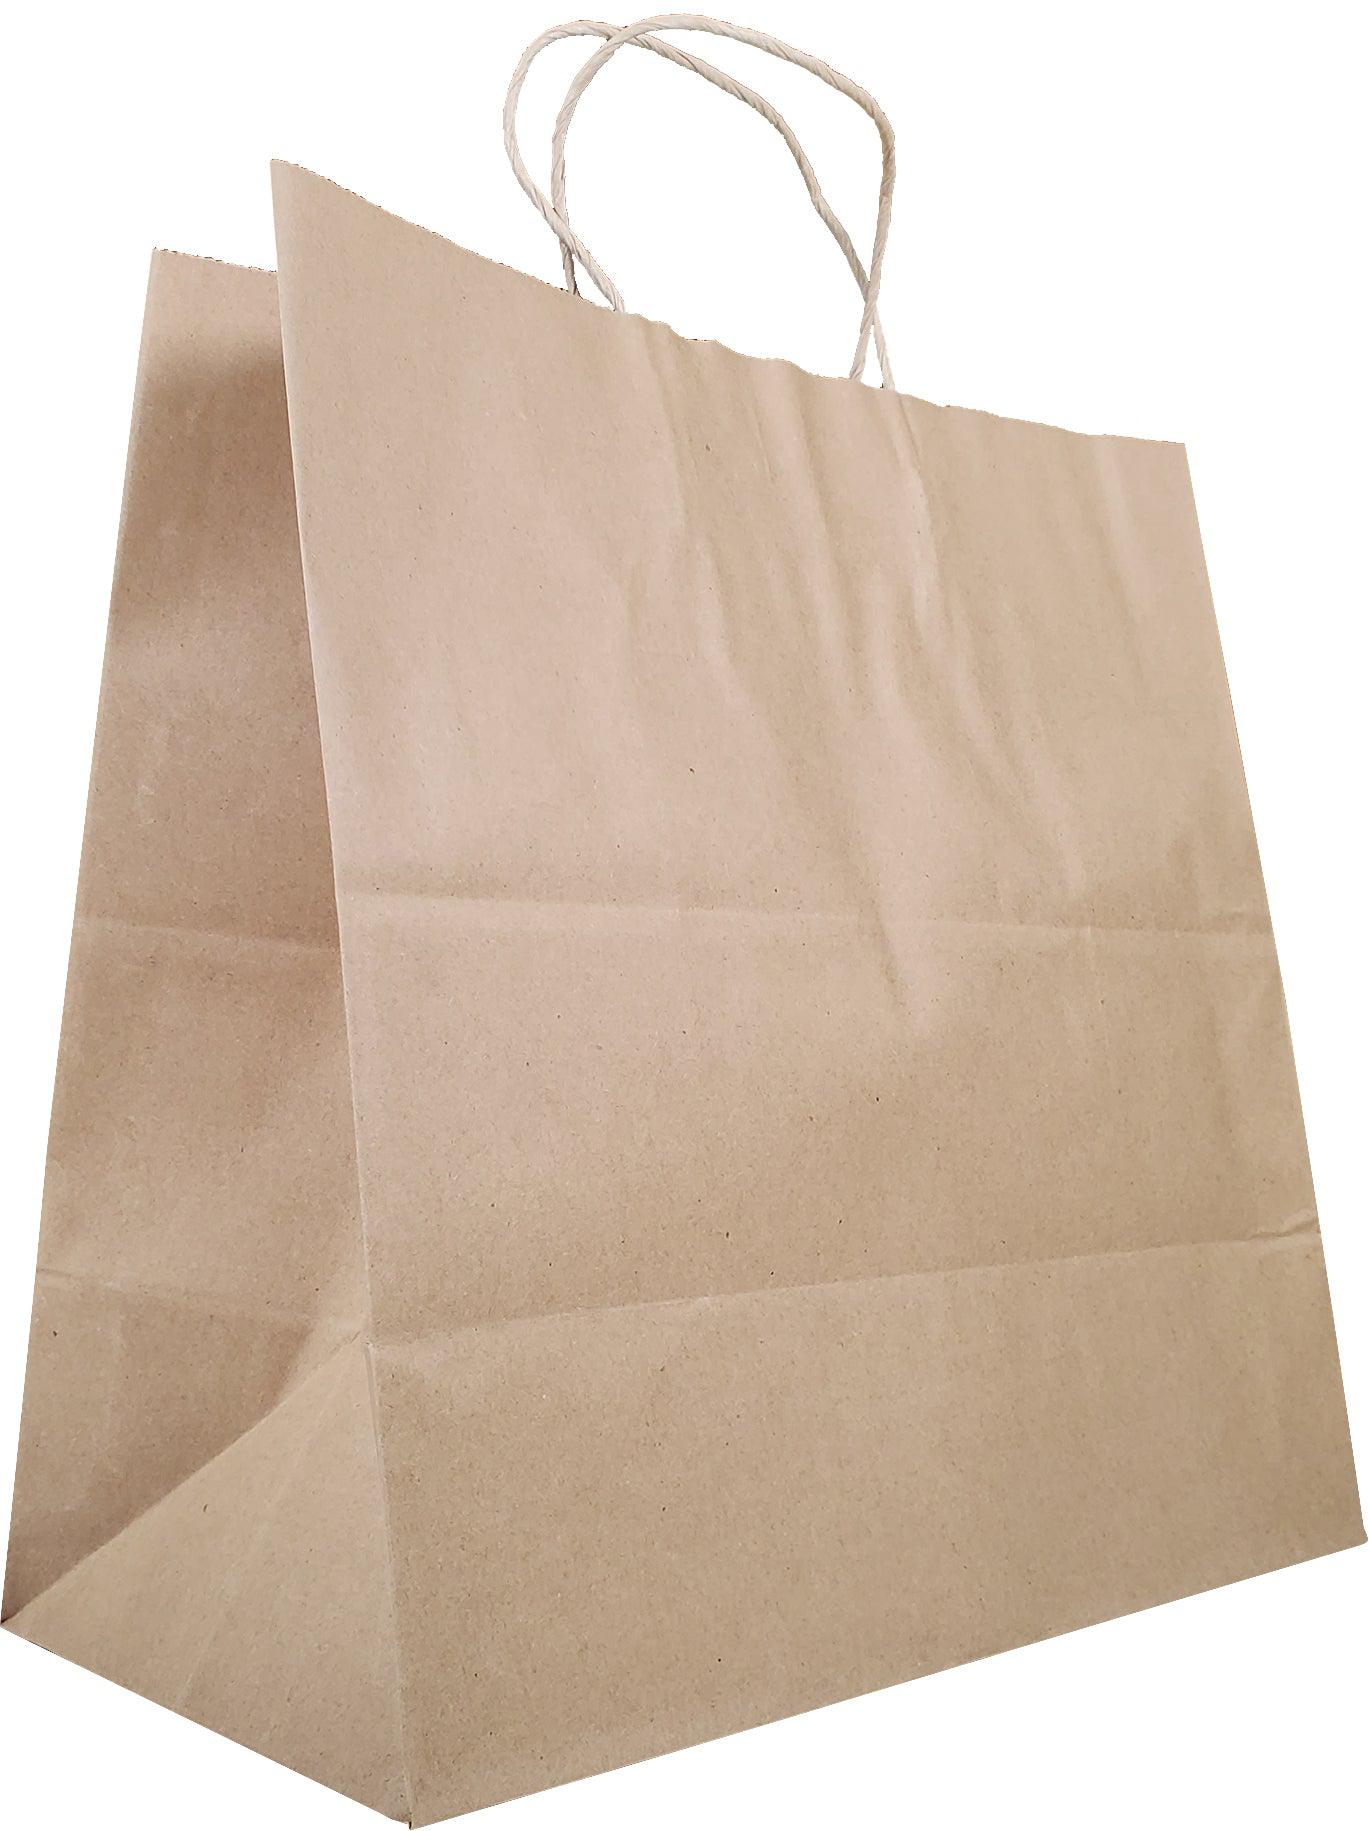 White Kraft Paper Bags, 10x5x13, 100ct 